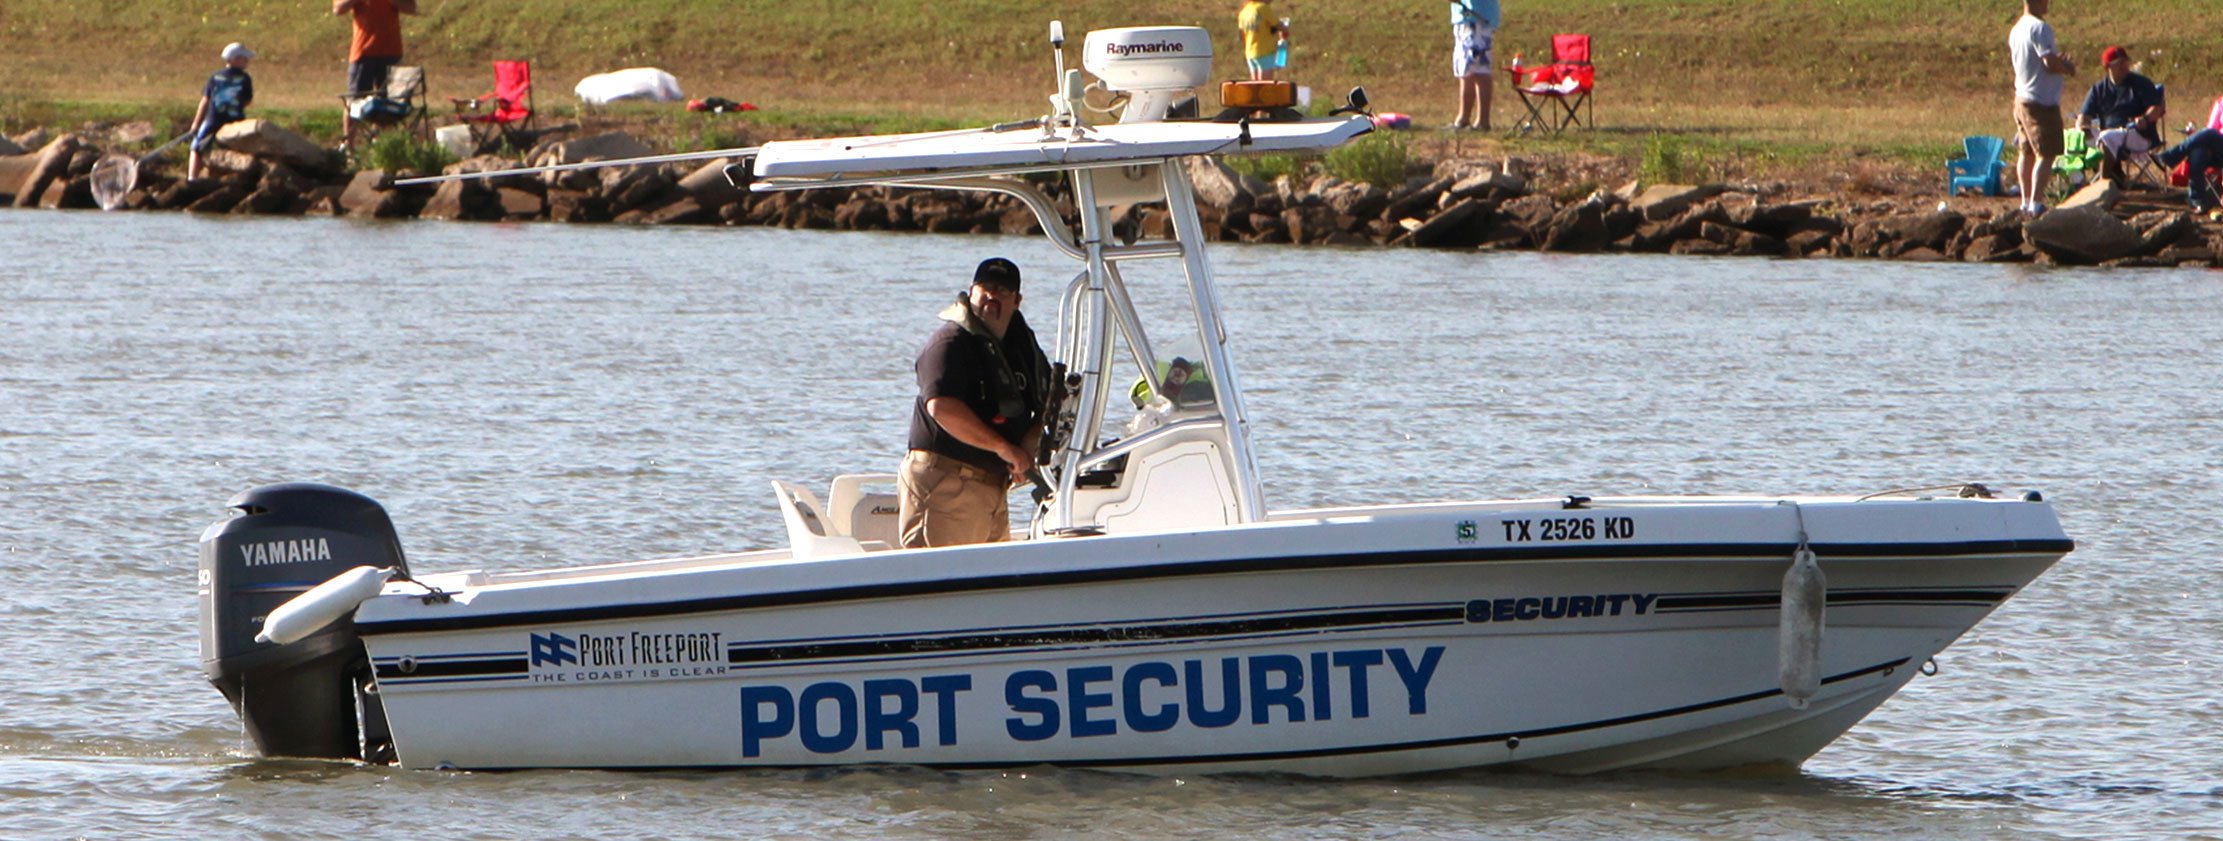 port security at port freeport tx